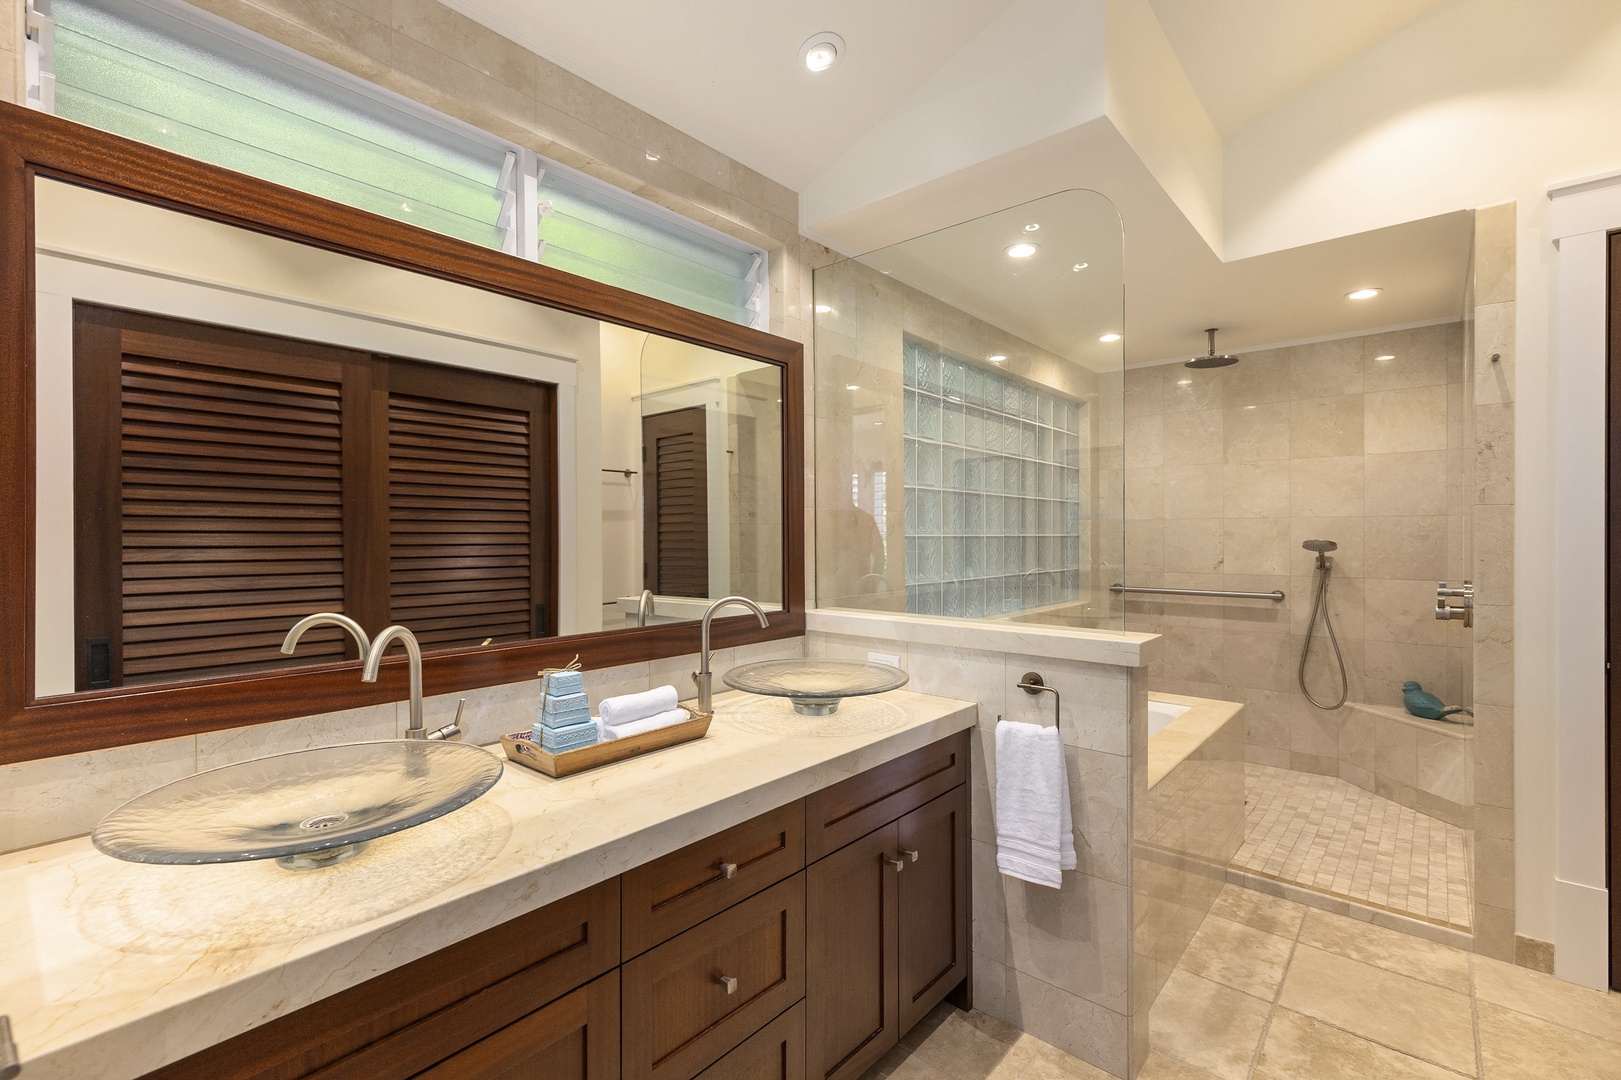 Kailua Vacation Rentals, Lanikai Villa - Guest Bedroom 2 ensuite with dual vanity, soaking tub, and walk-in shower